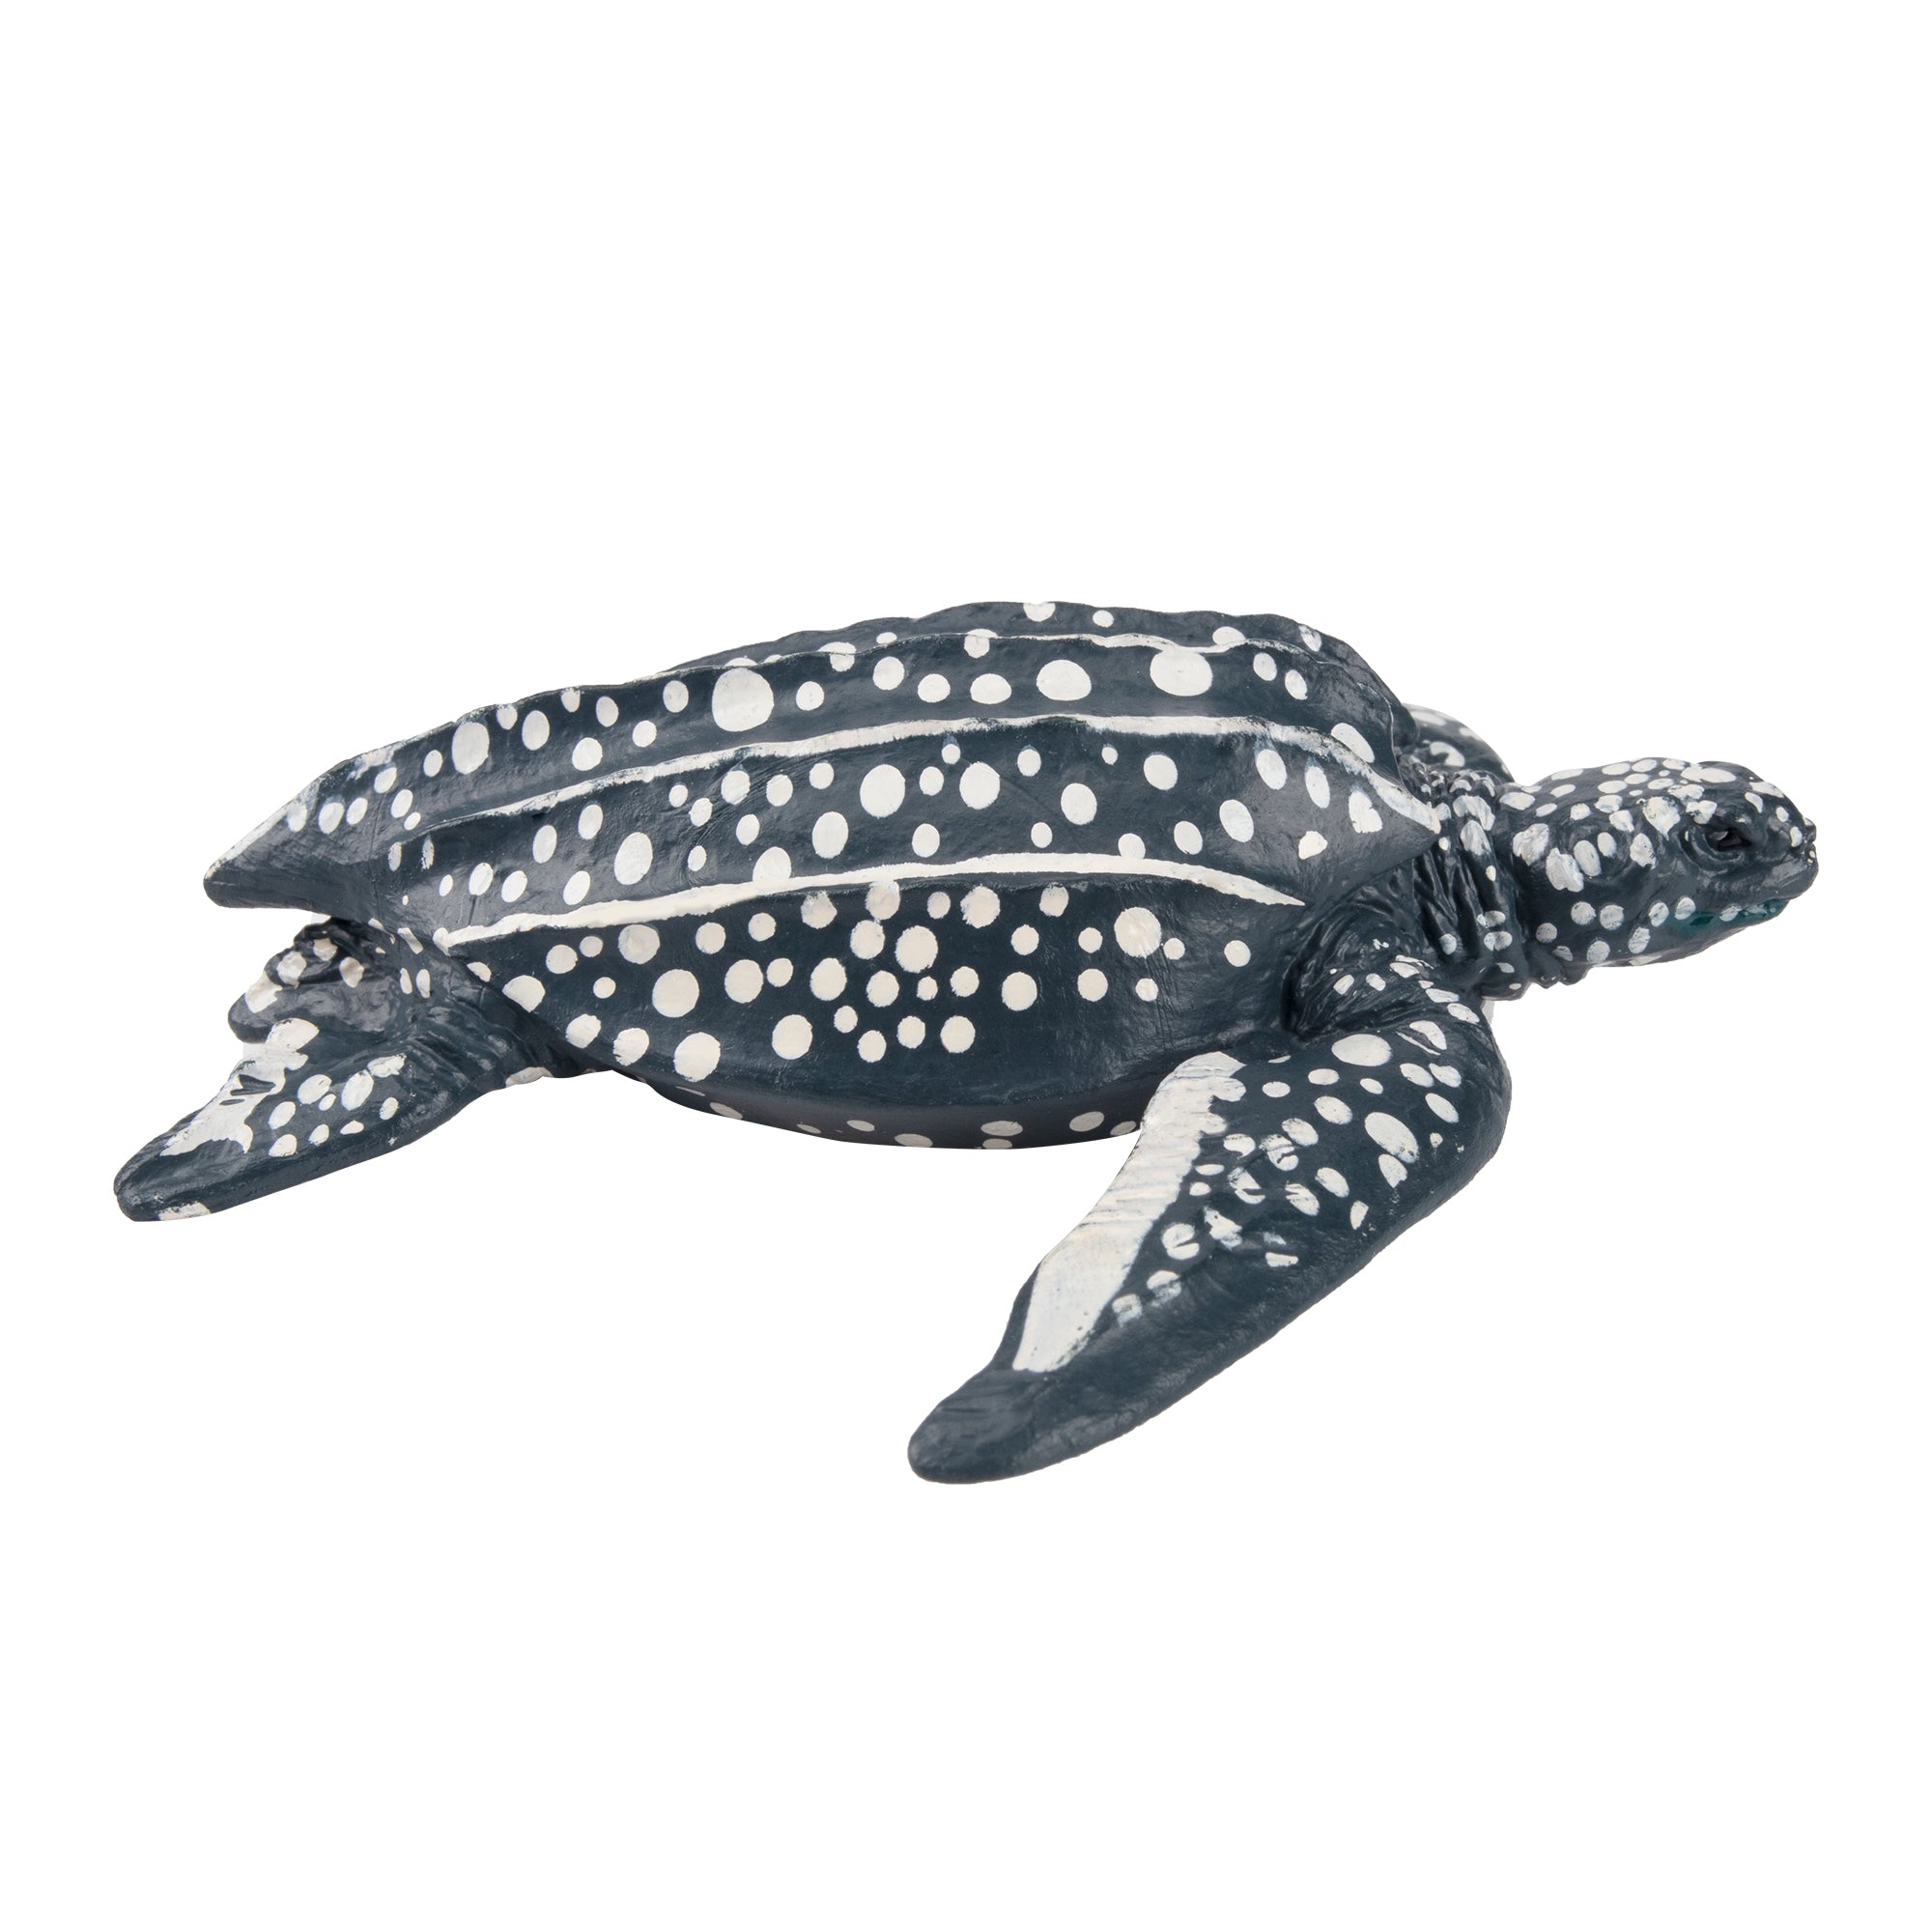 Toymany Leatherback Sea Turtle Figurine Toy-side